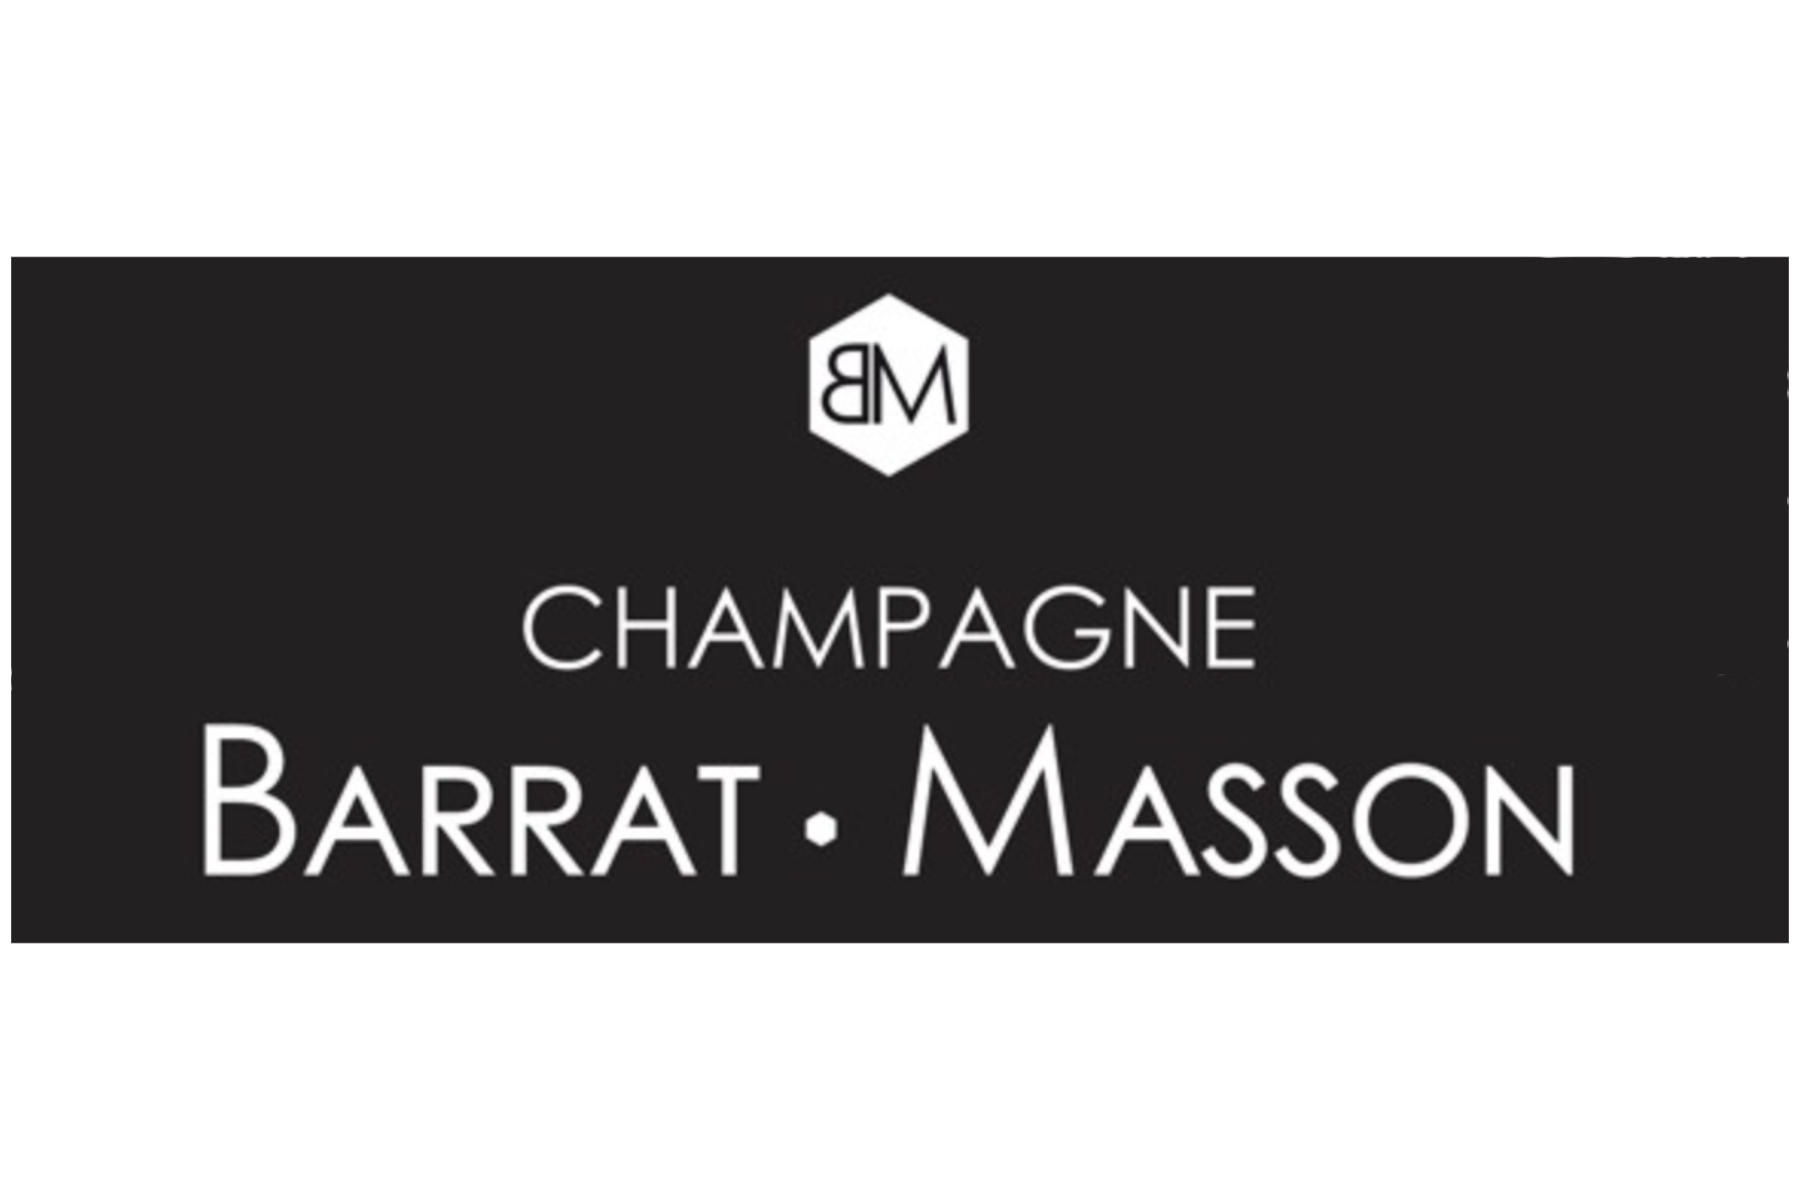 Champagne Barrat Masson